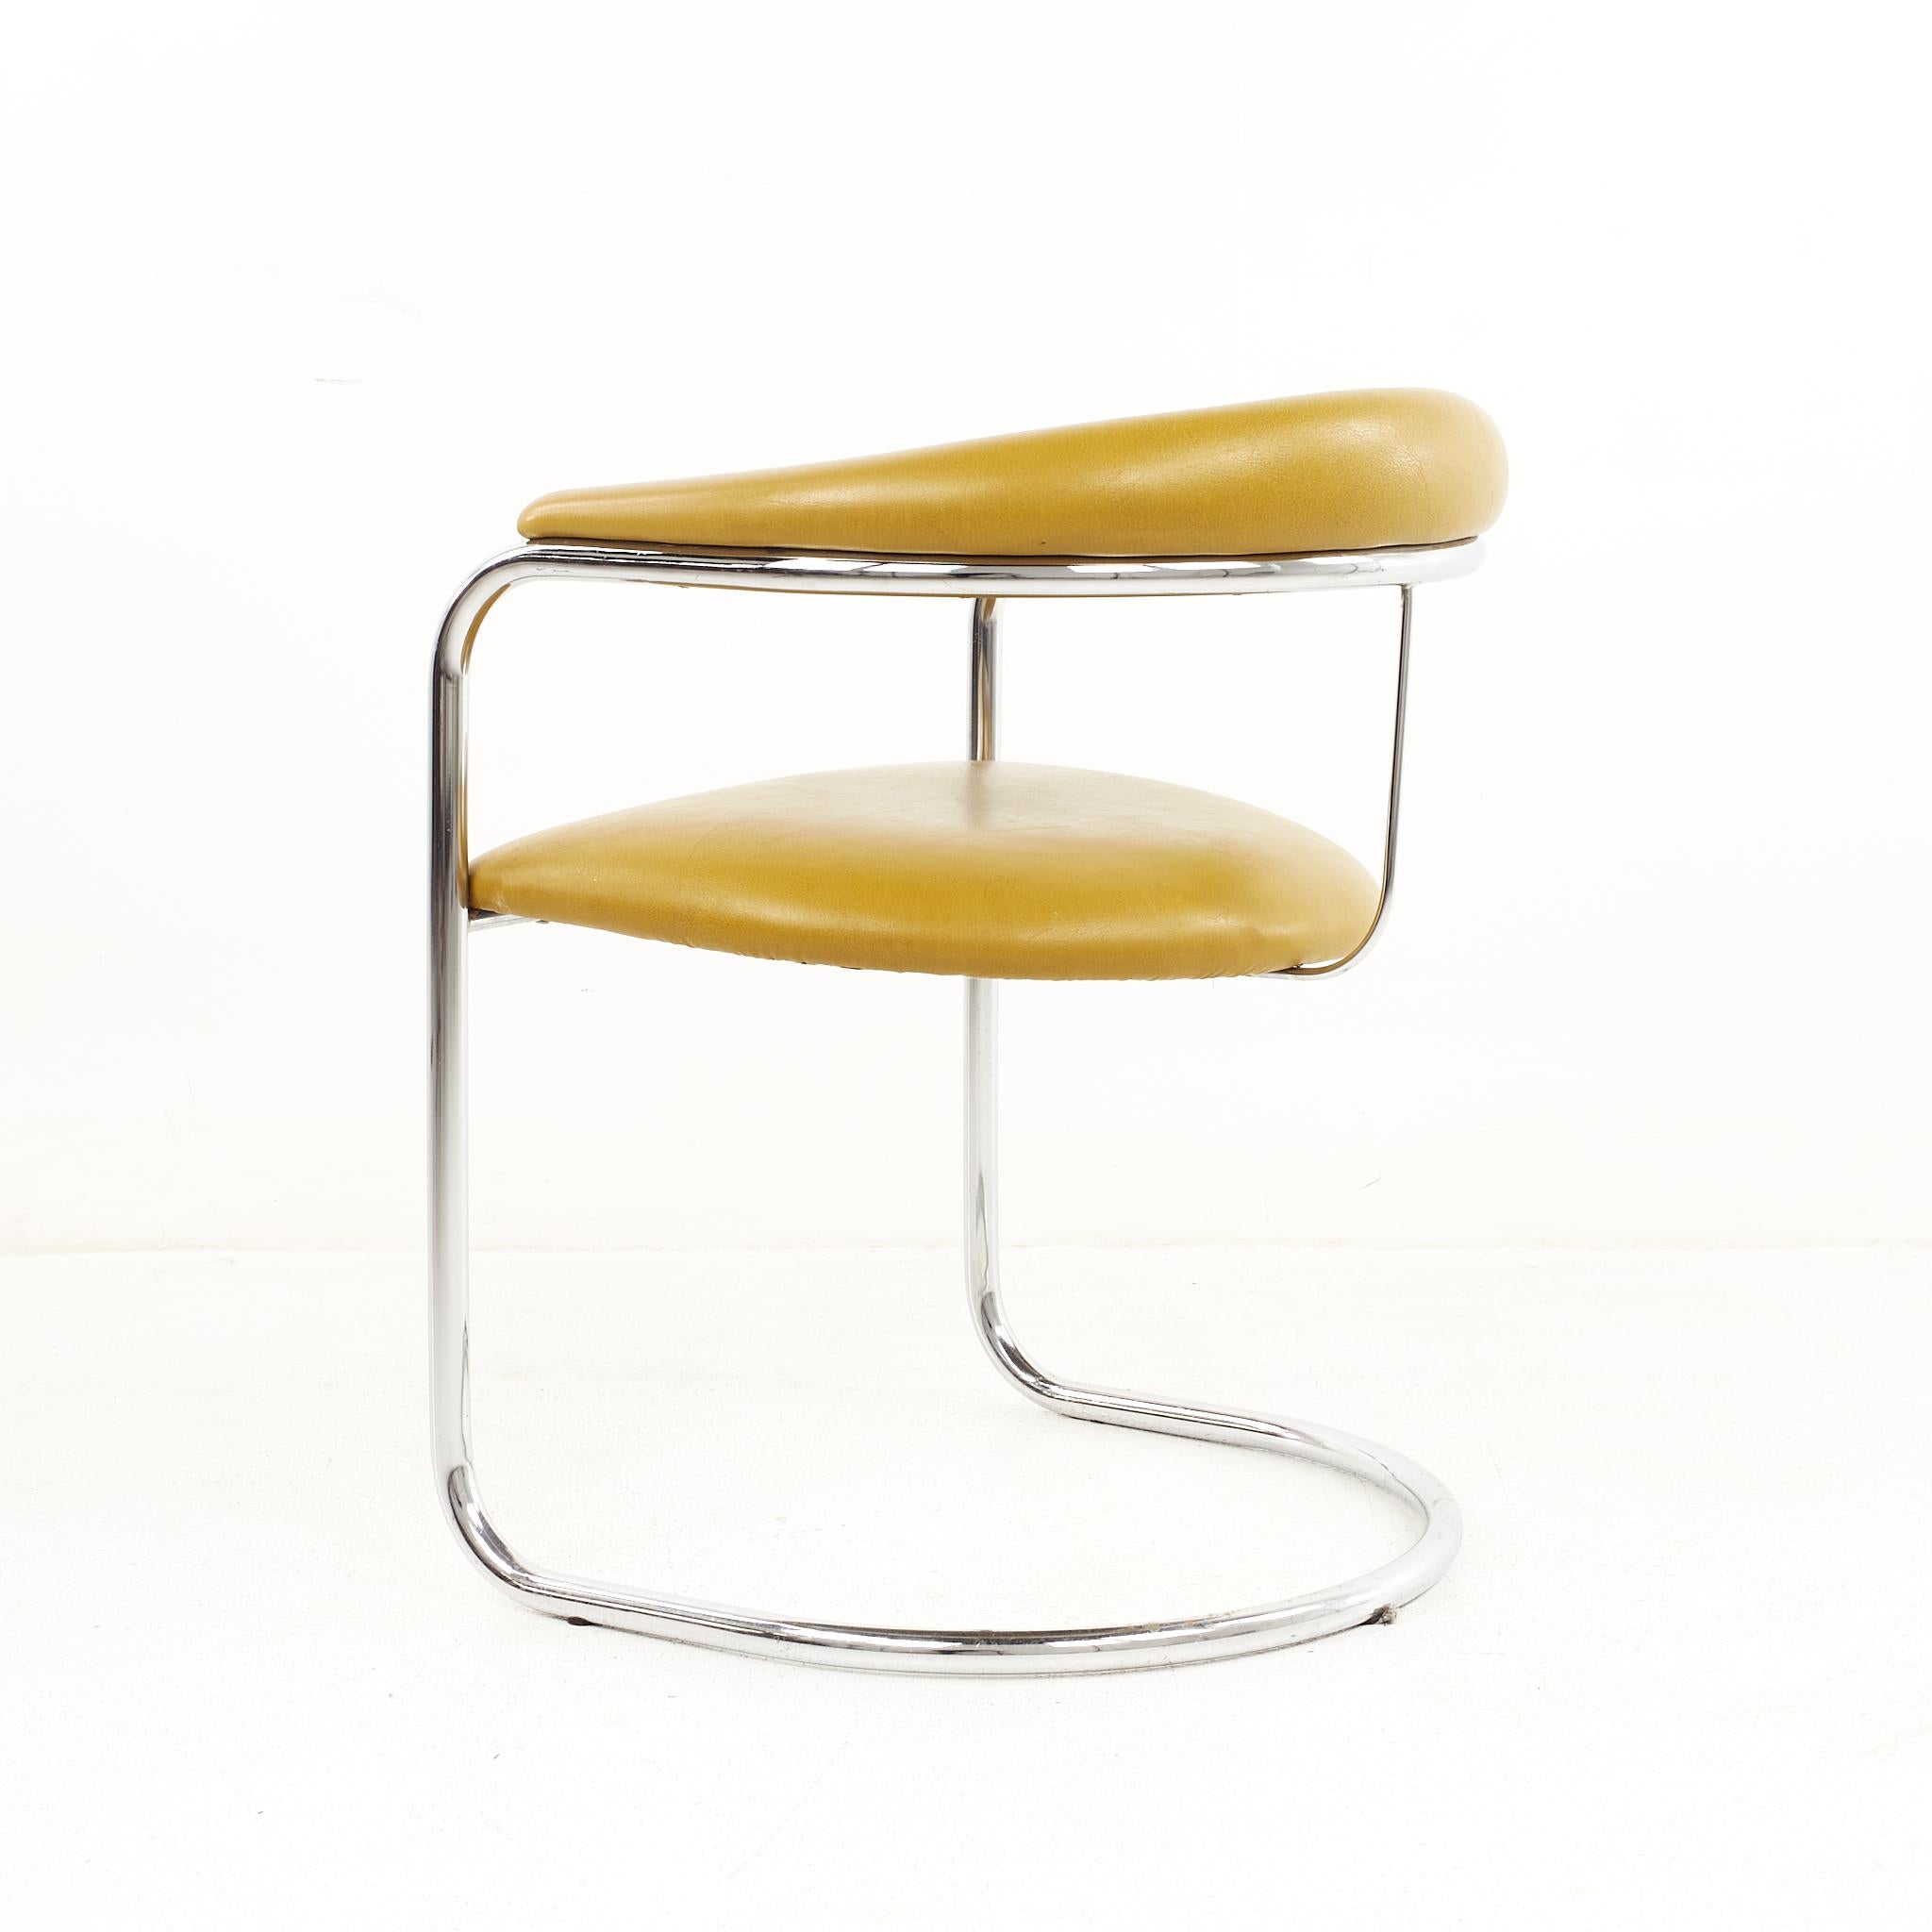 Anton Lorenz for Thonet Mid Century Chrome Dining Chairs - Set of 6 3